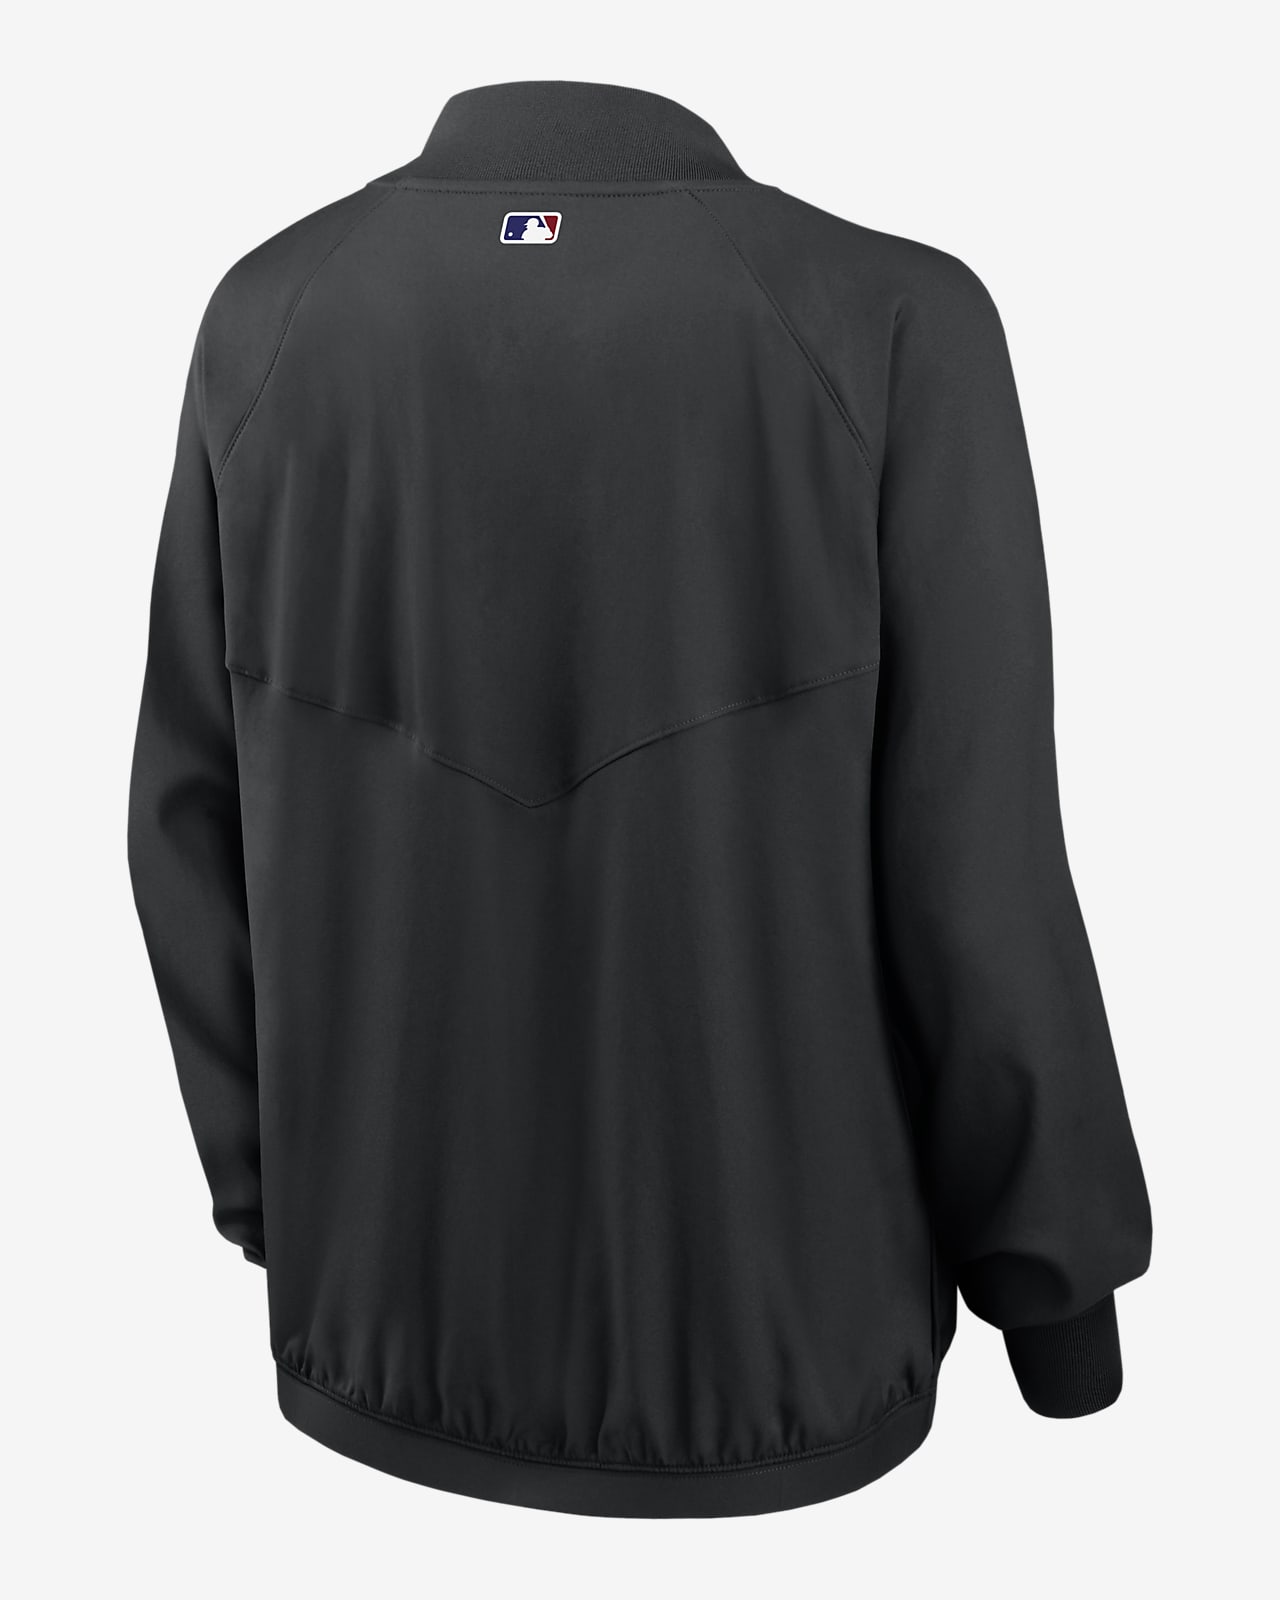 Official MLB Nike Jackets, MLB Pullovers, Track Jackets, Coats